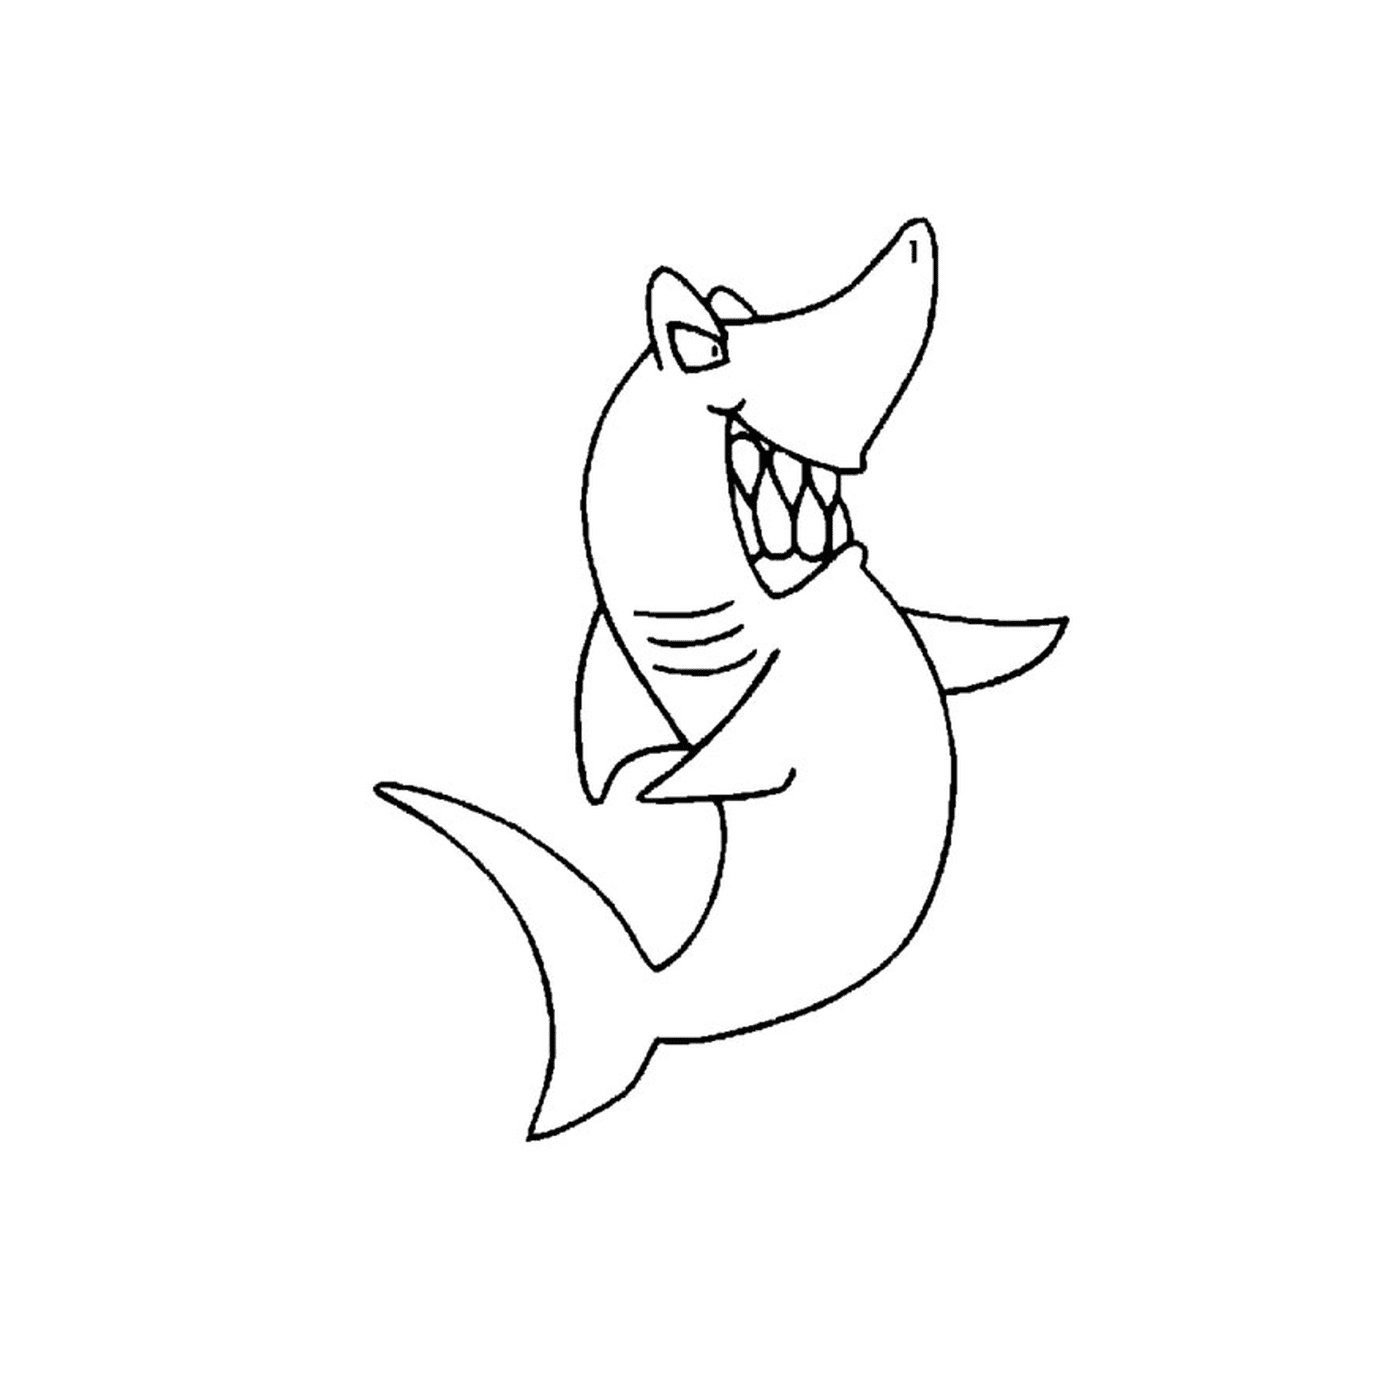  Peregrine shark smiling 